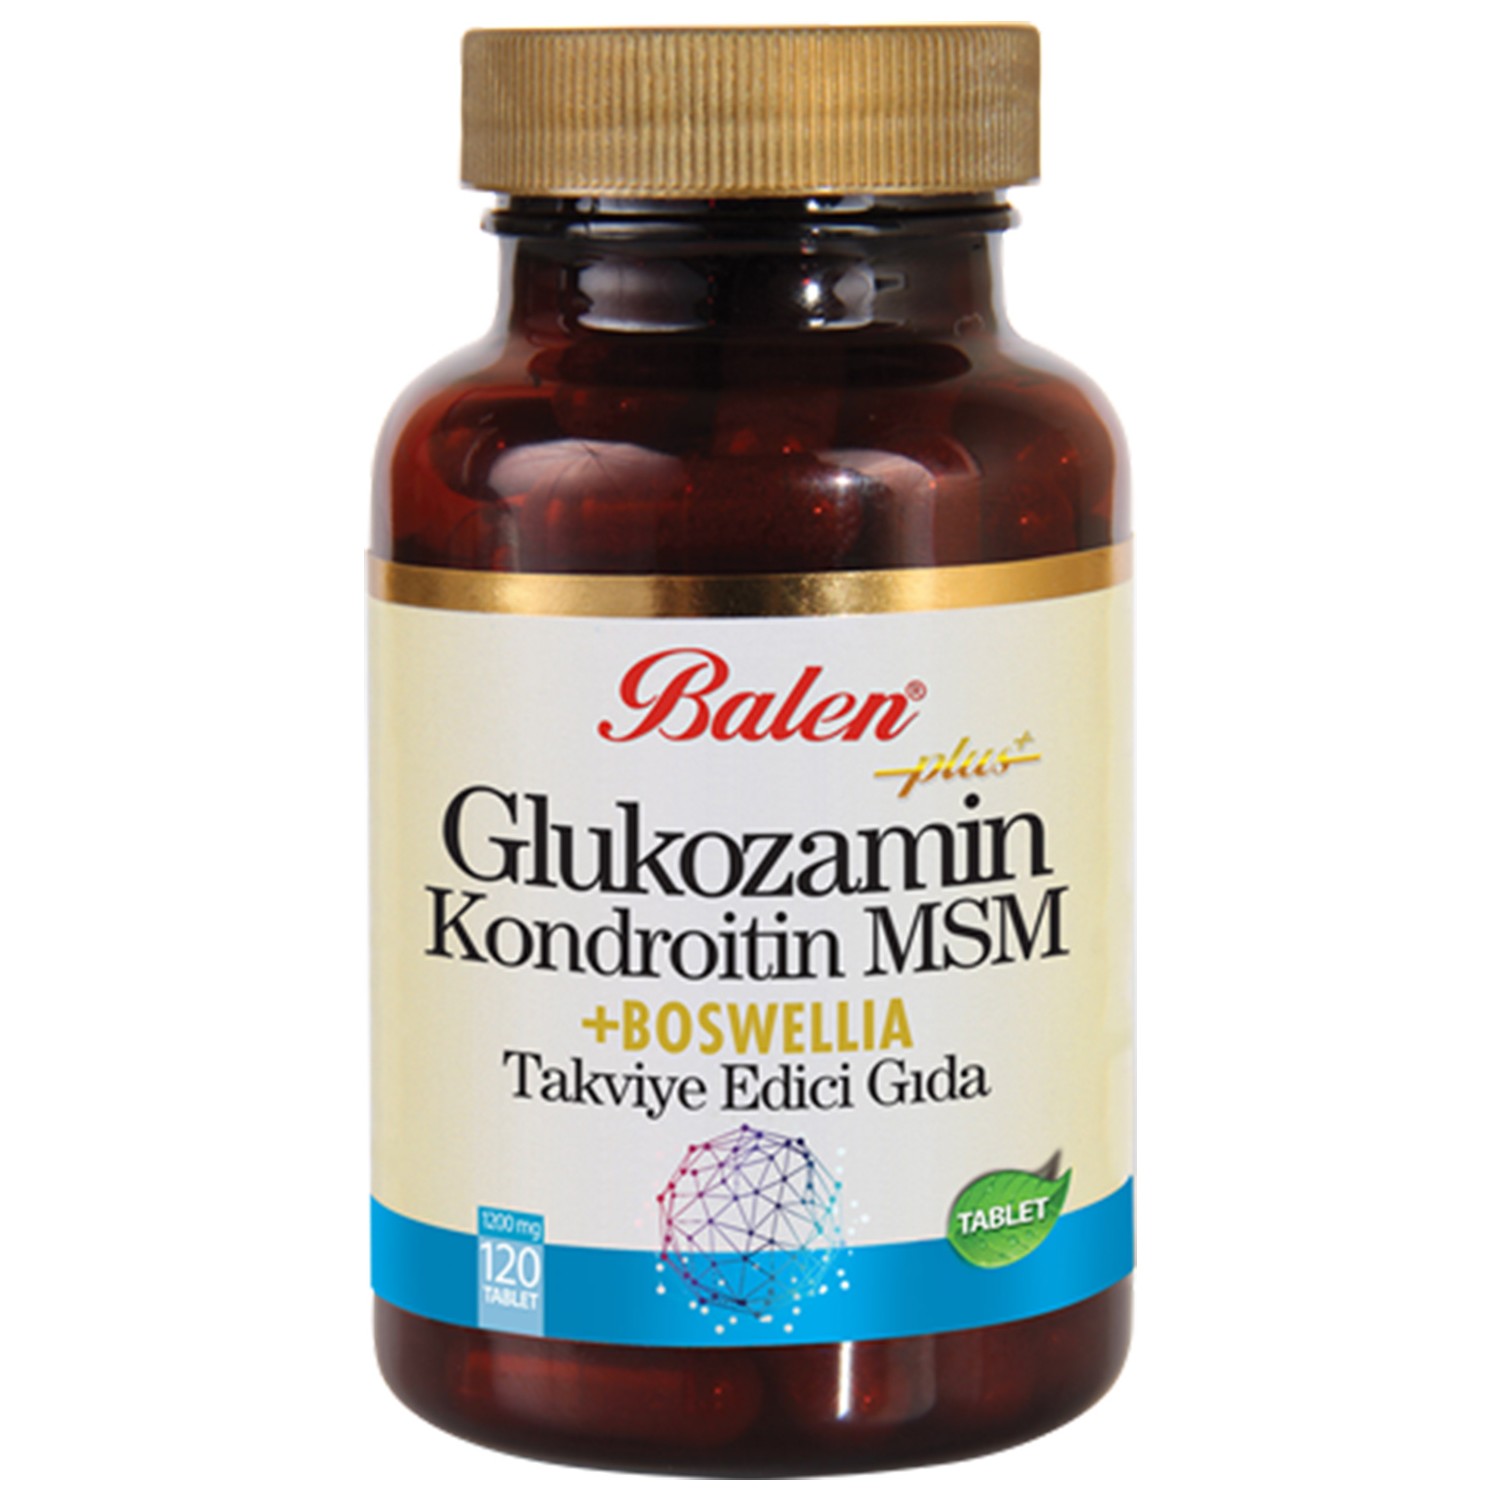 Активная добавка глюкозамин Balen Chondroitin Msm и Boswellia, 120 капсул, 1200 мг активная добавка глюкозамин balen chondroitin msm 120 капсул 850 мг 3 штуки